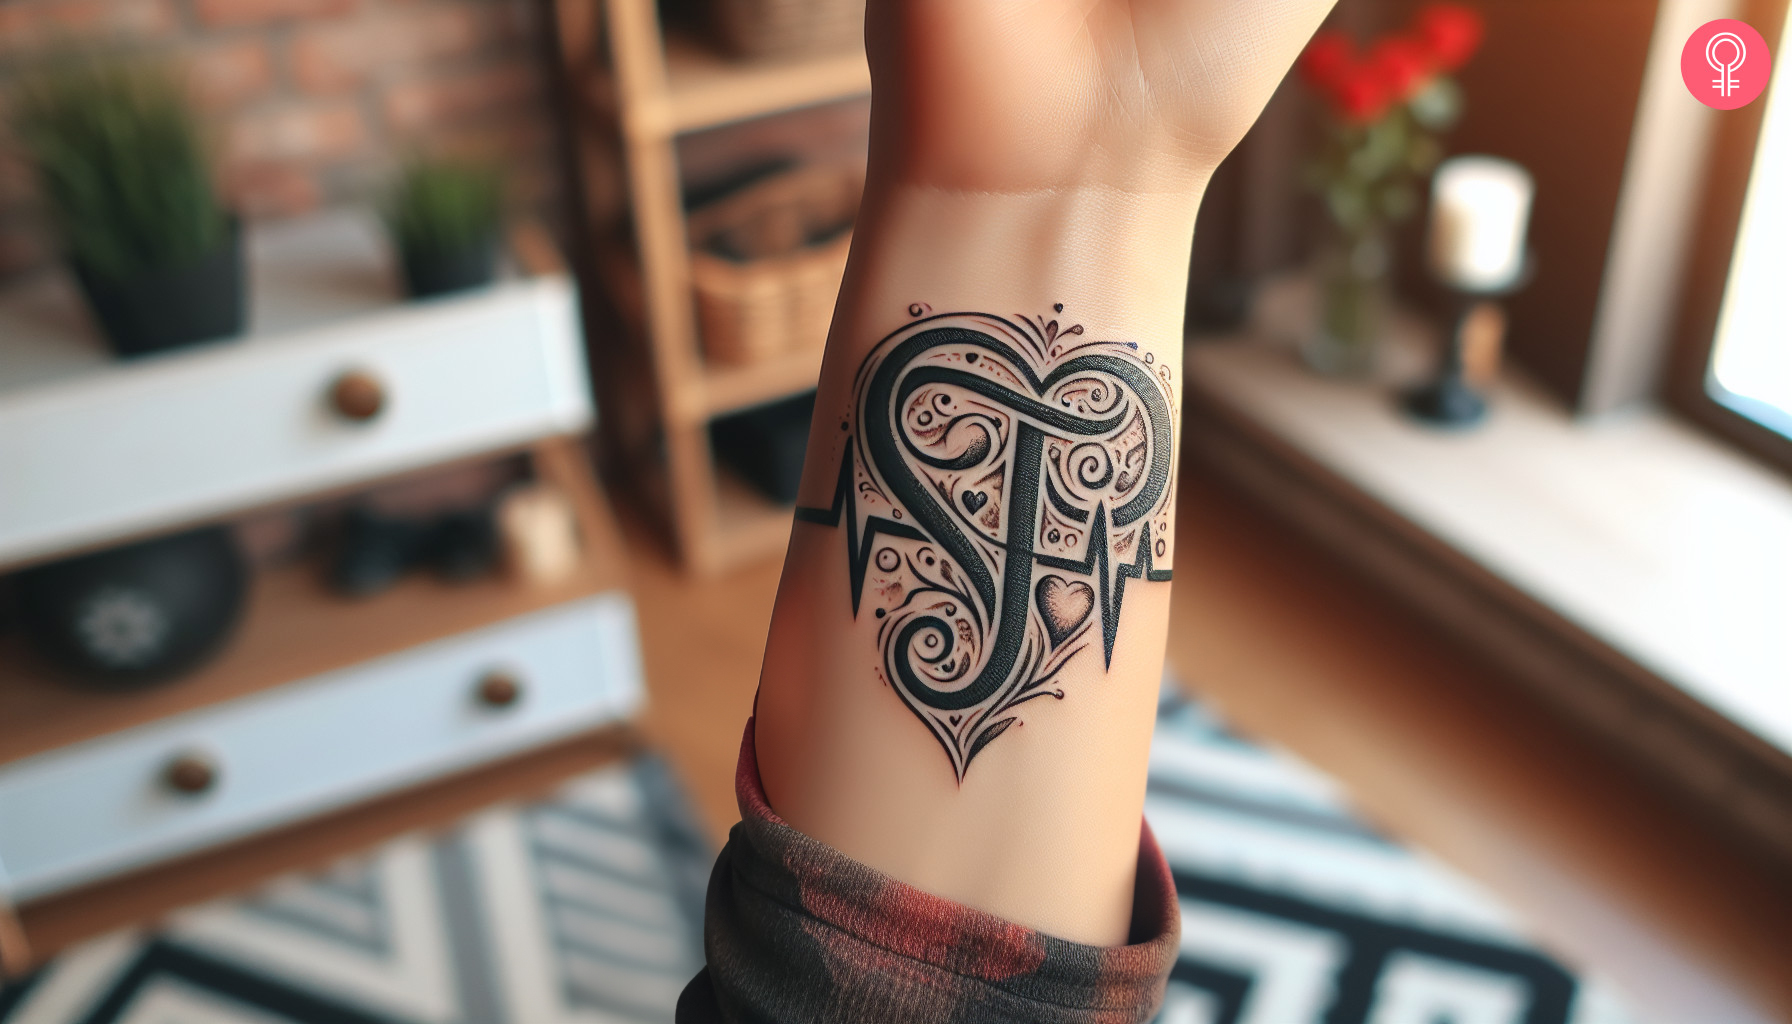 A fancy T letter love tattoo on a woman’s forearm